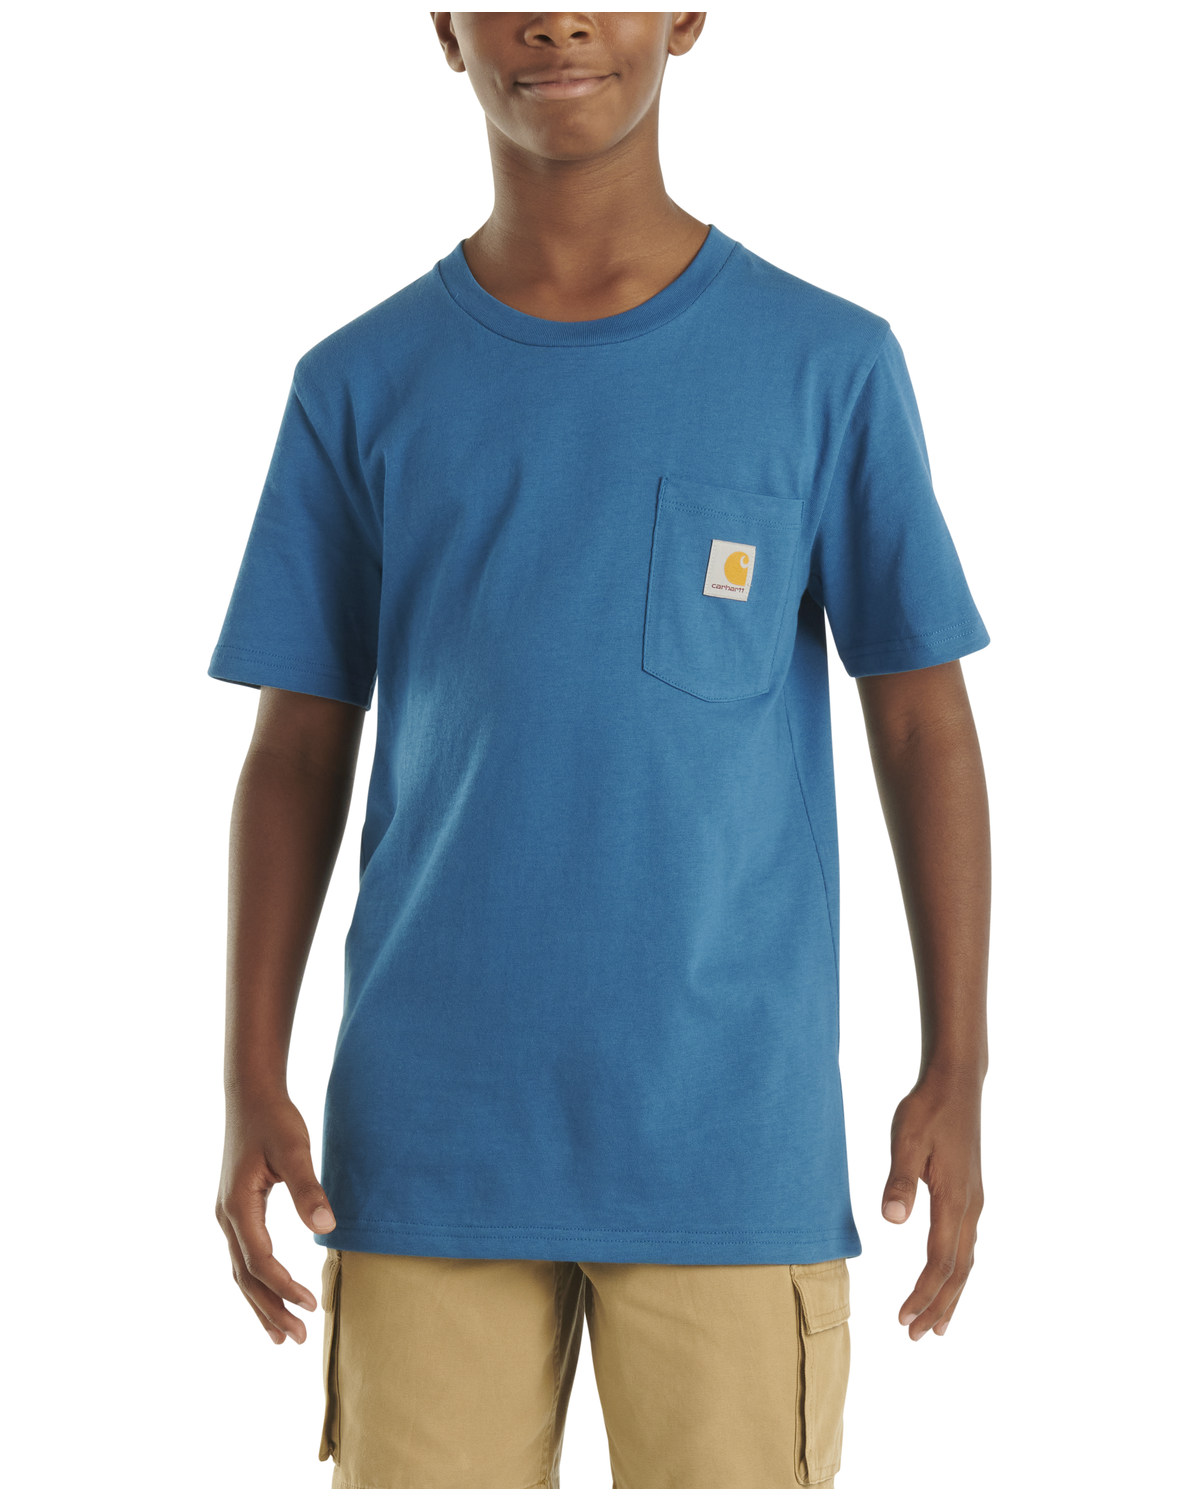 Carhartt Little Boys' Short Sleeve Pocket T-Shirt